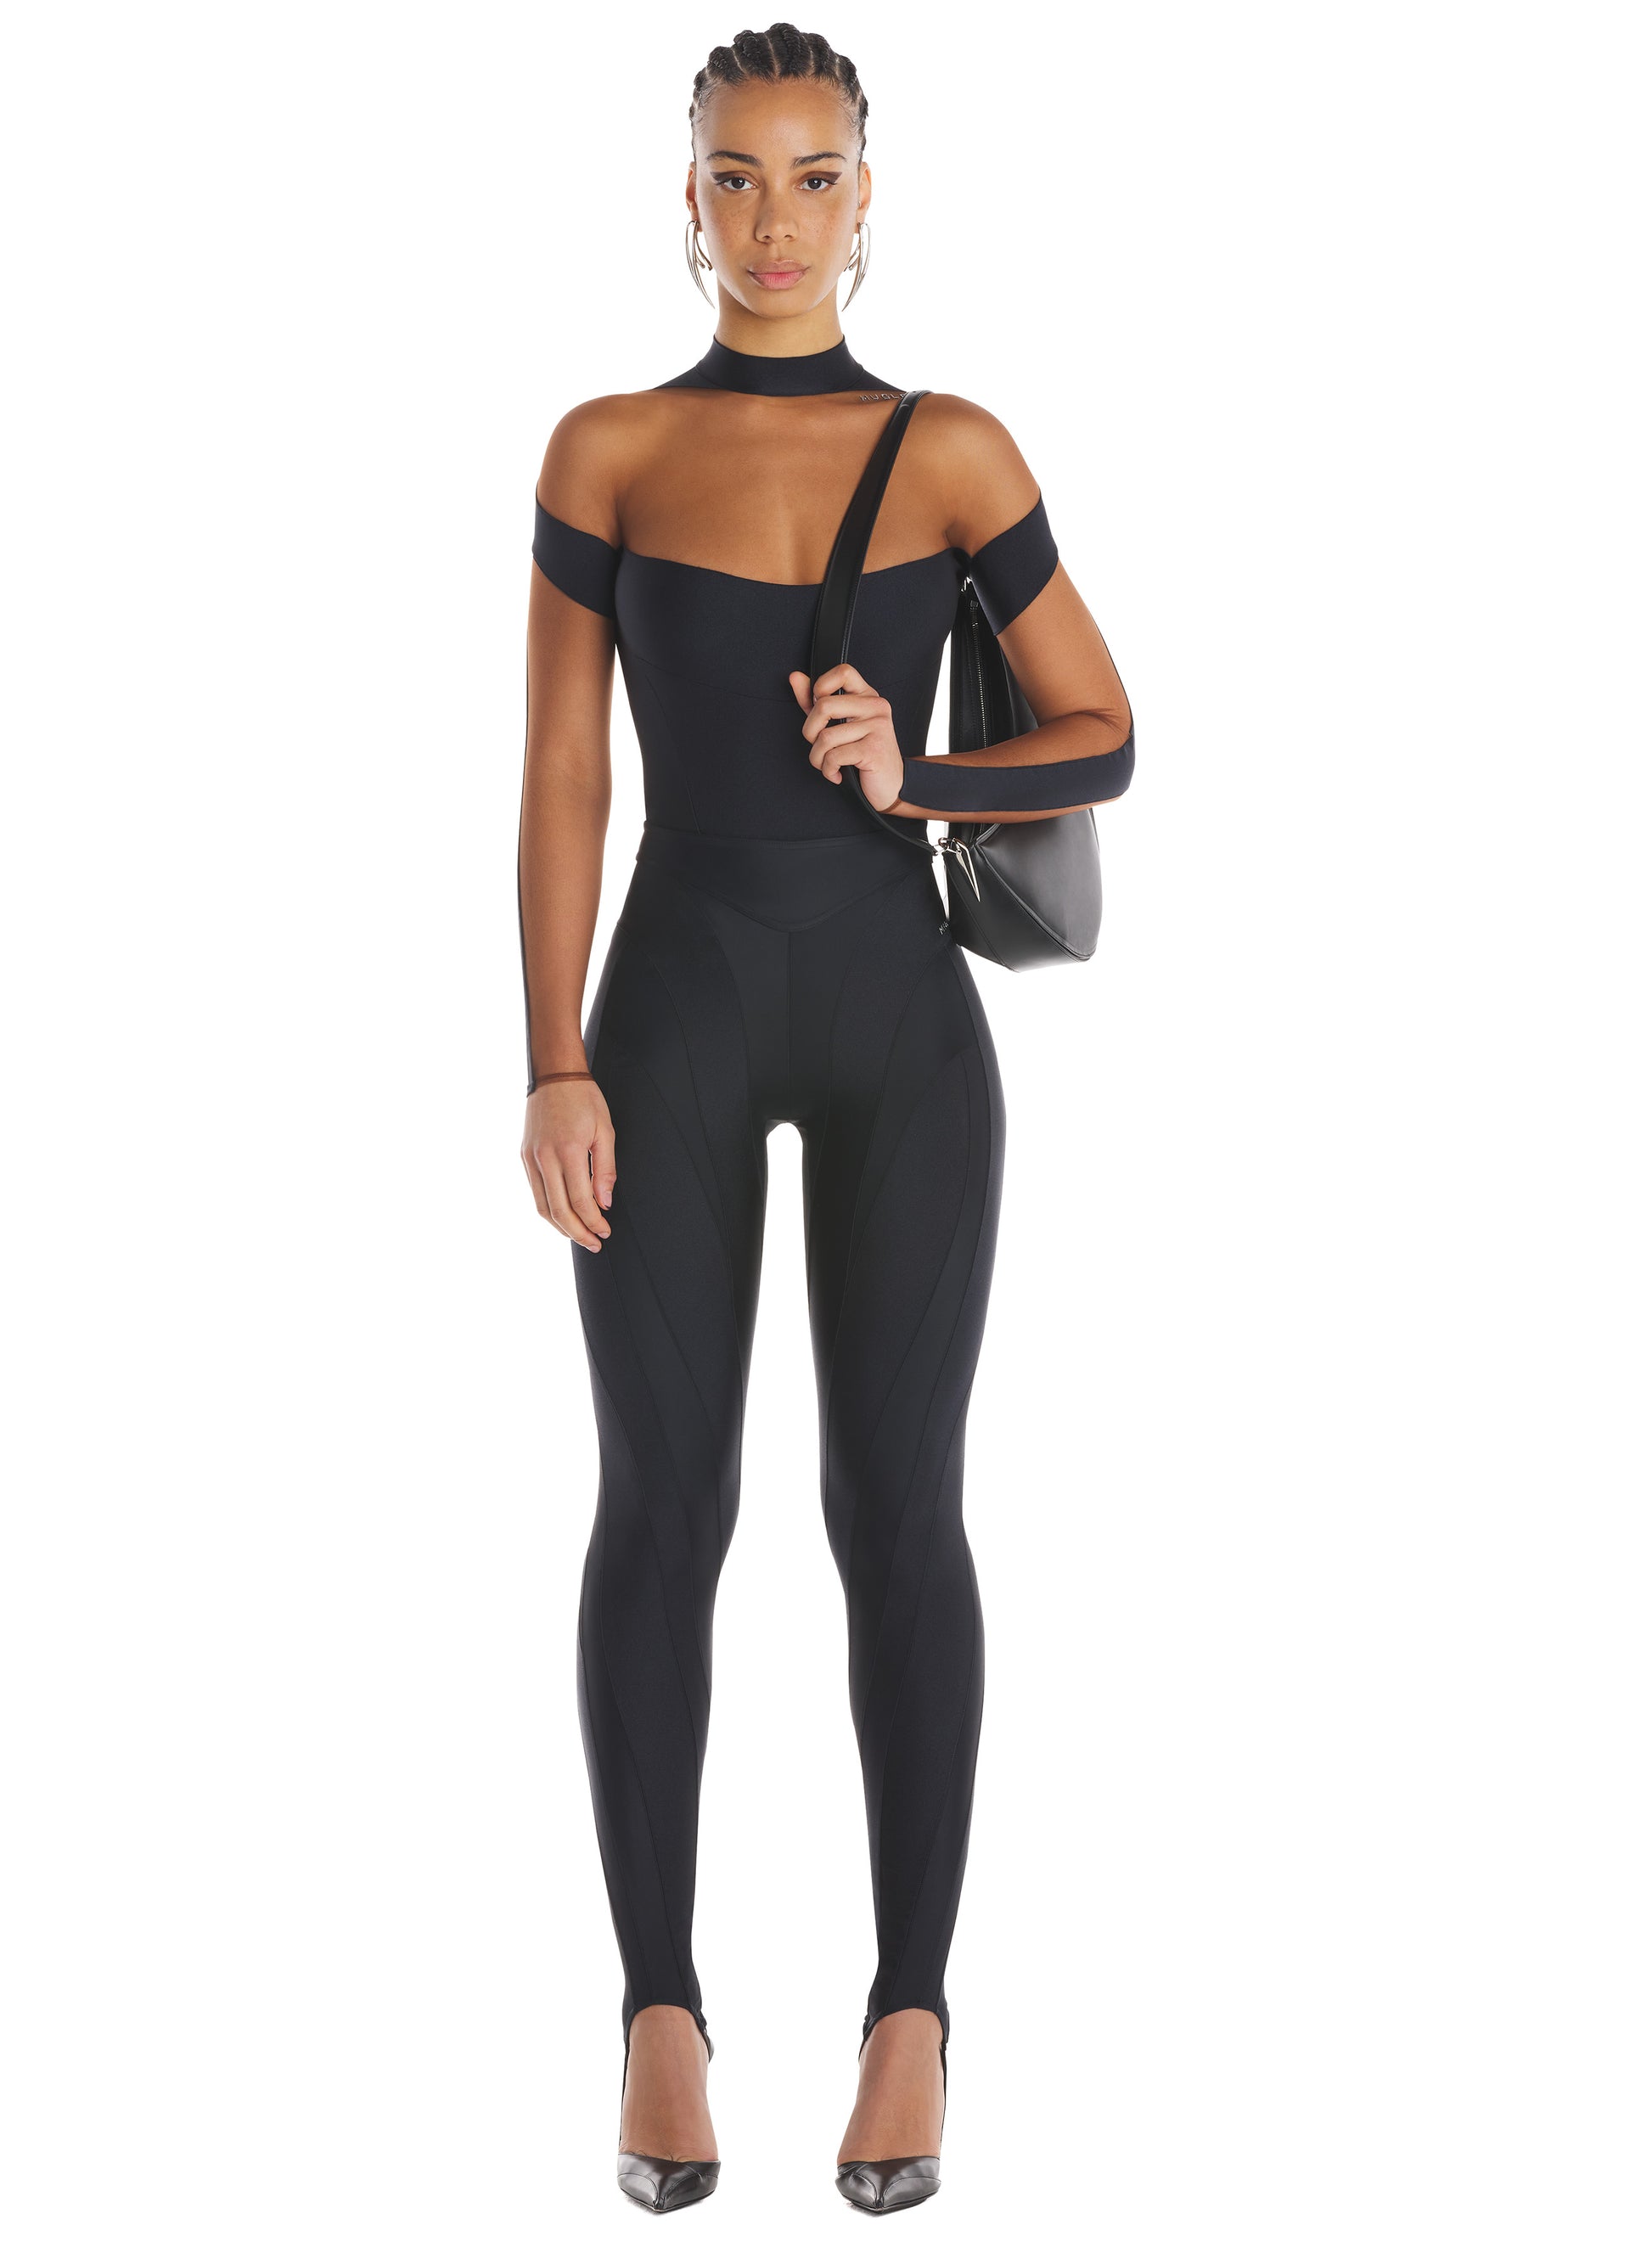 spiral leggings woman tan and black in polyamide - MUGLER - d — 2